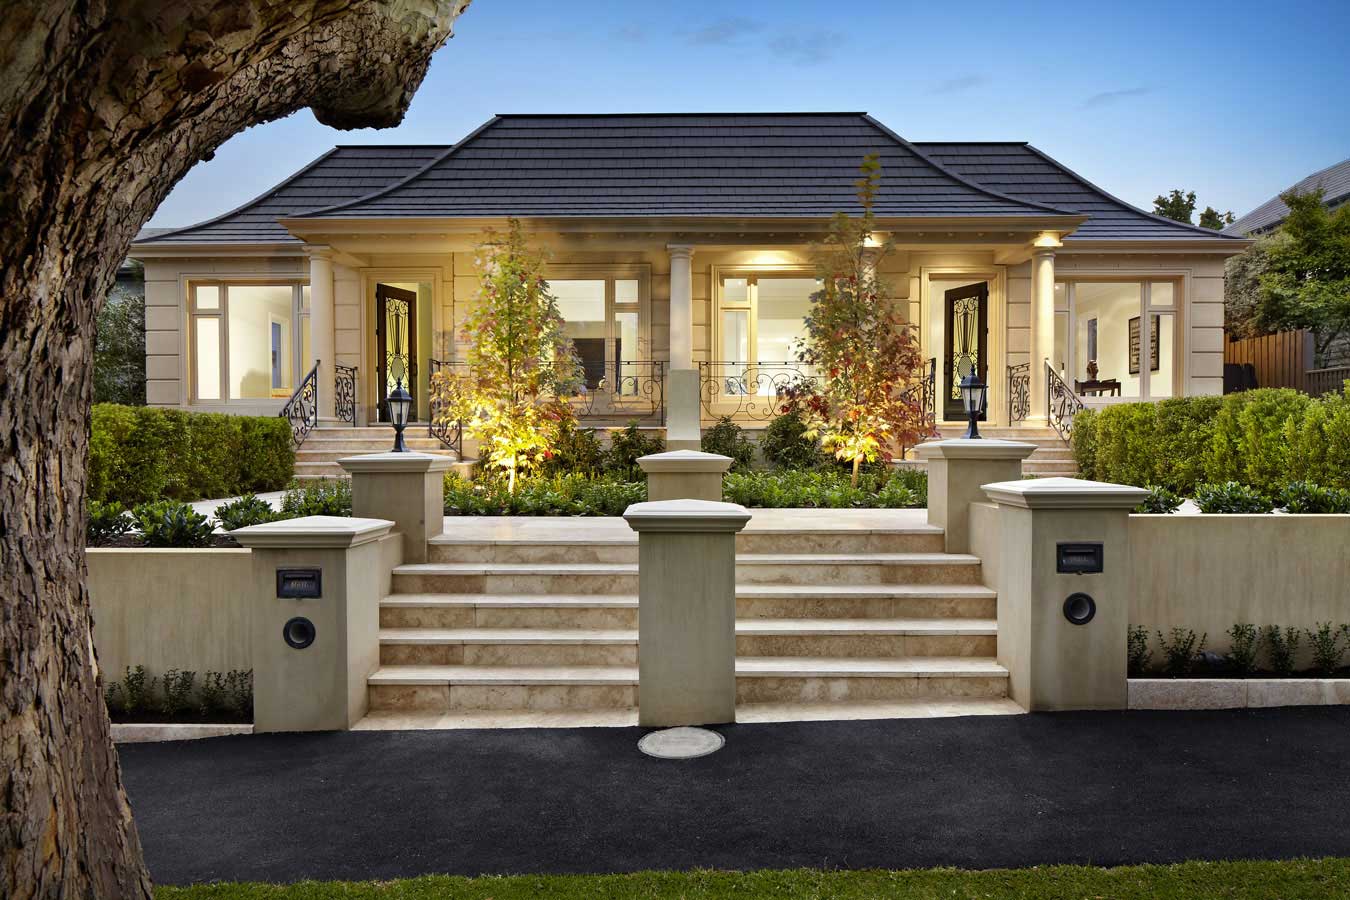 Melbourne’s Affordable New Home Builder